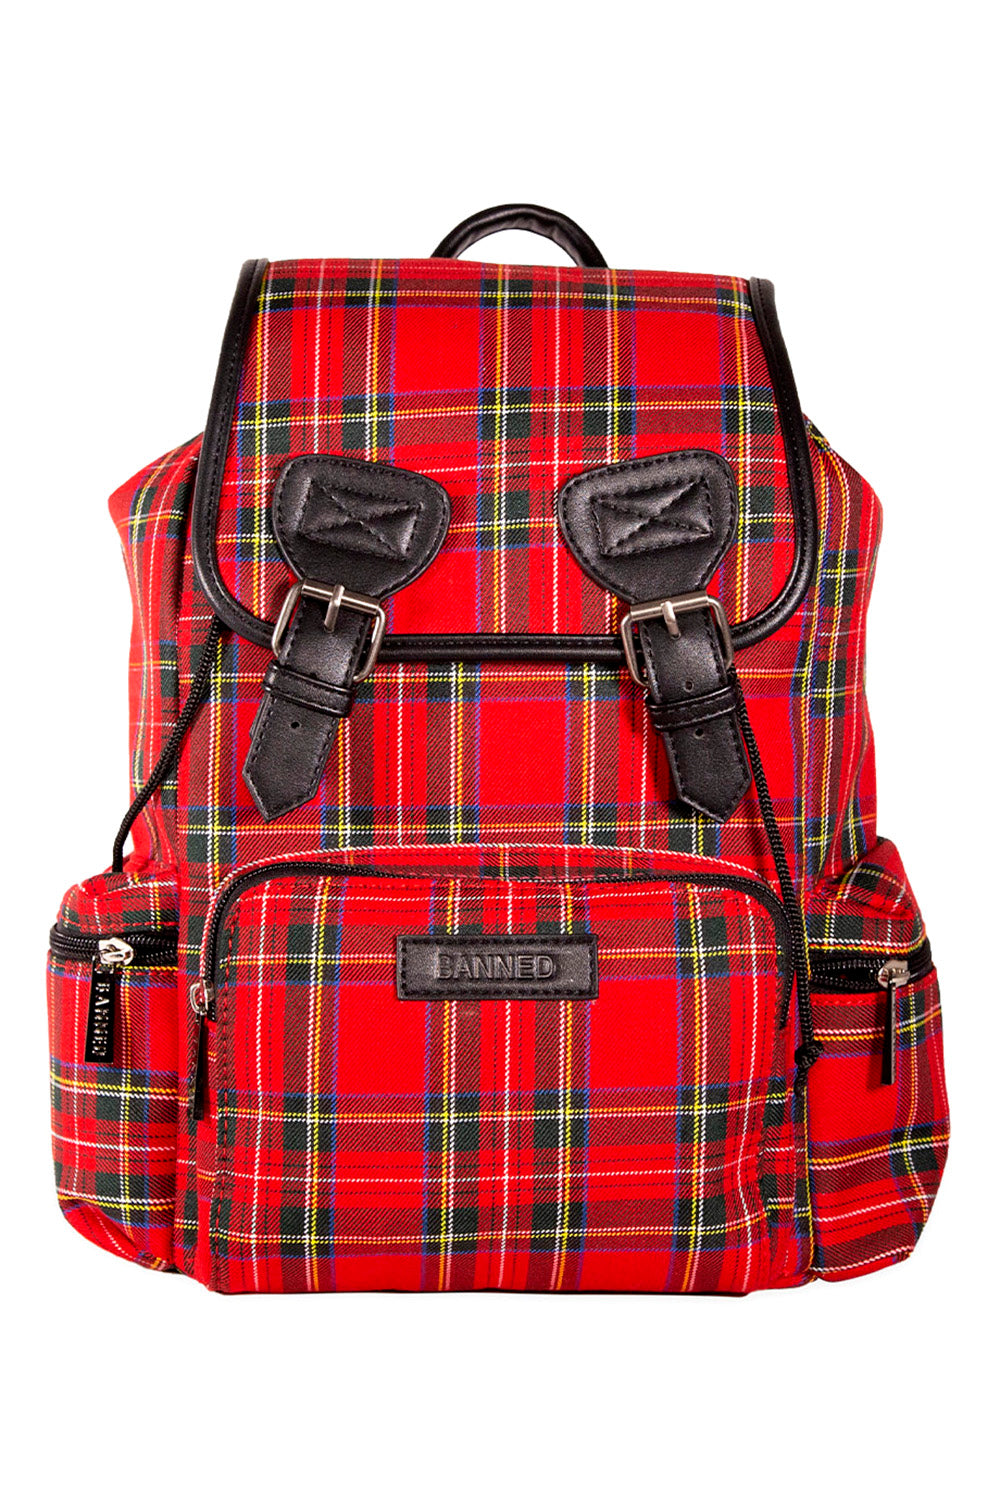 Mad Plaid Backpack [RED PLAID]